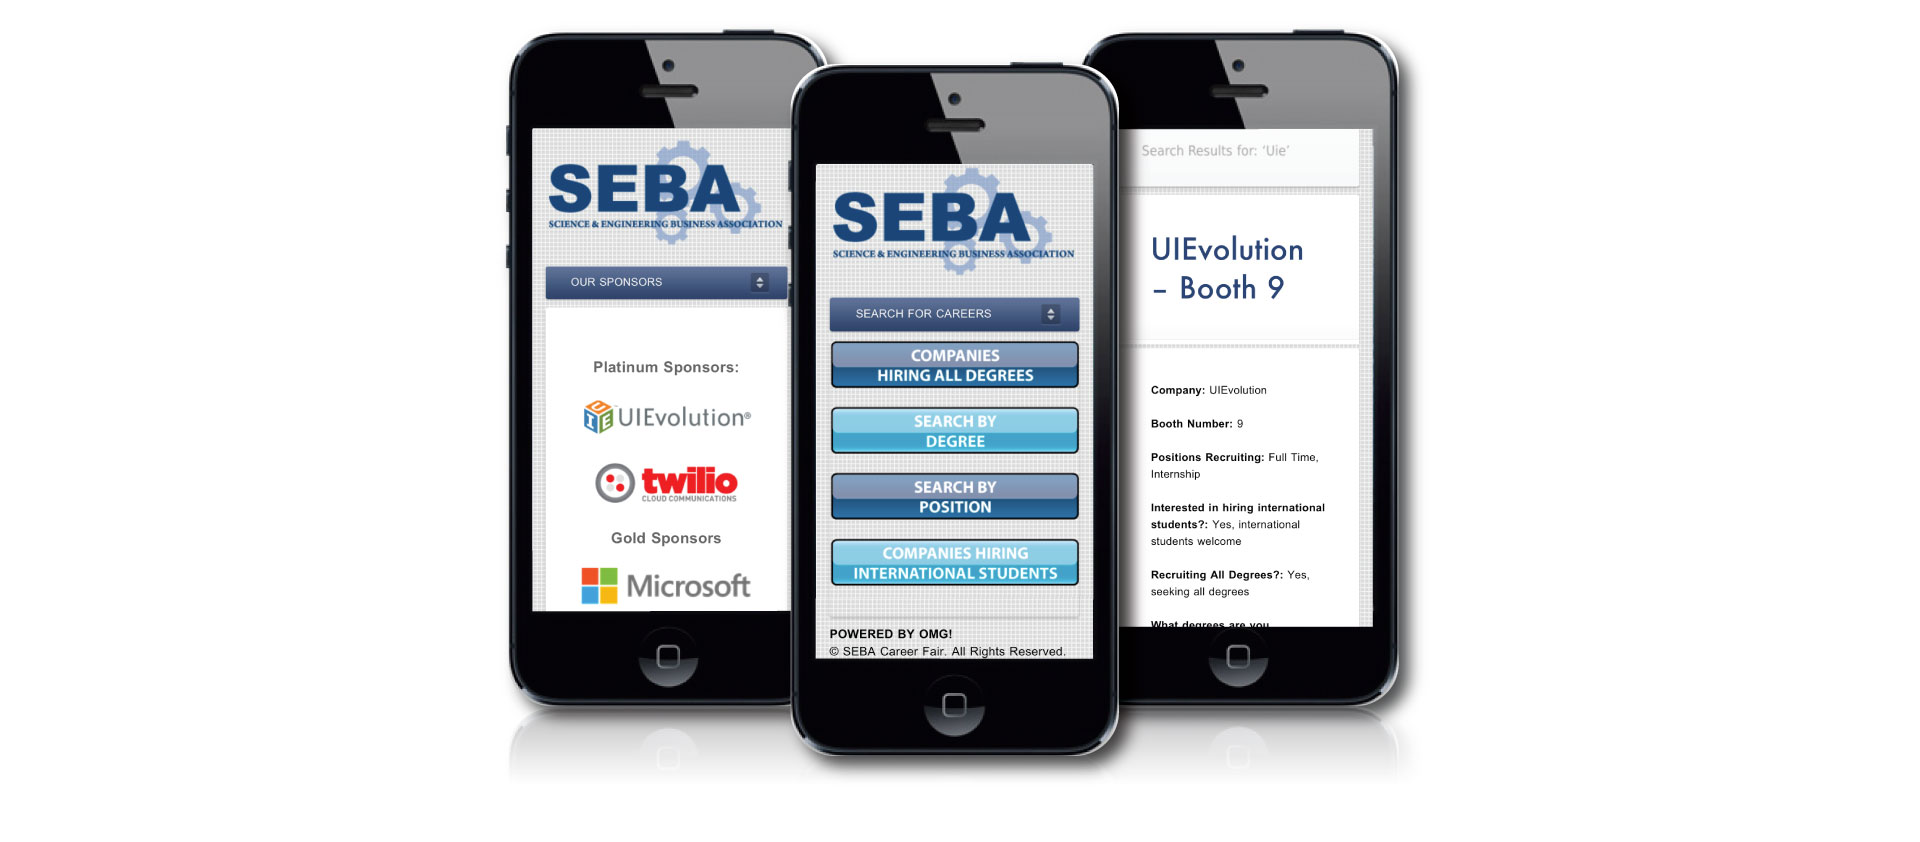 University of WA SEBA Mobile Website designed by Ontra Marketing Group